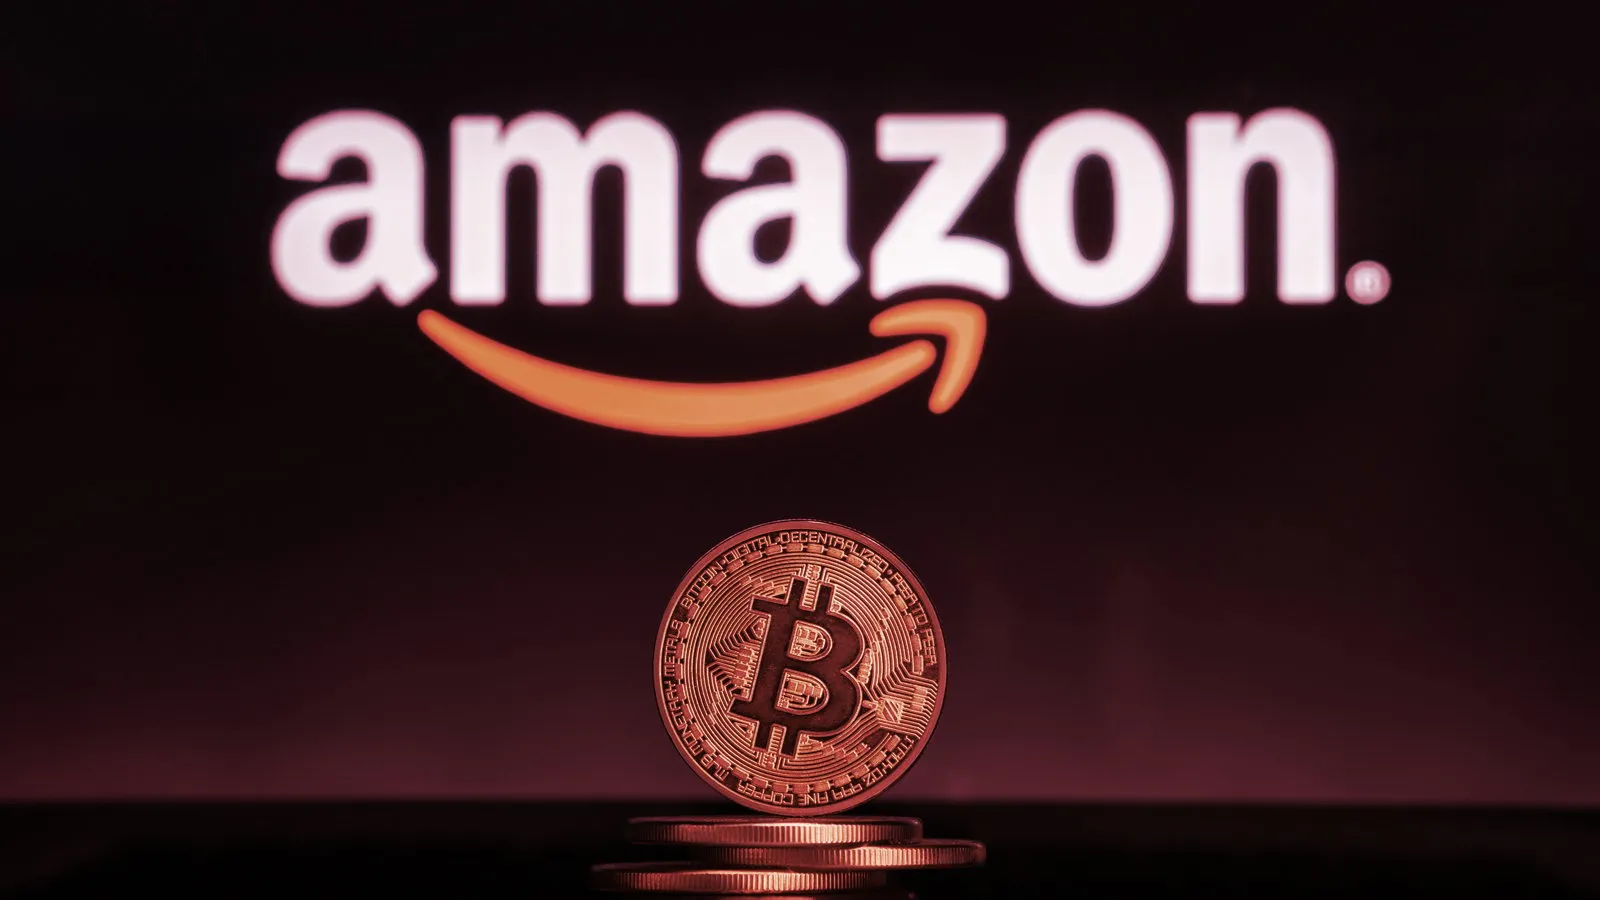 Actualmente, Amazon no acepta pagos en criptomonedas como el Bitcoin. Imagen: Shutterstock